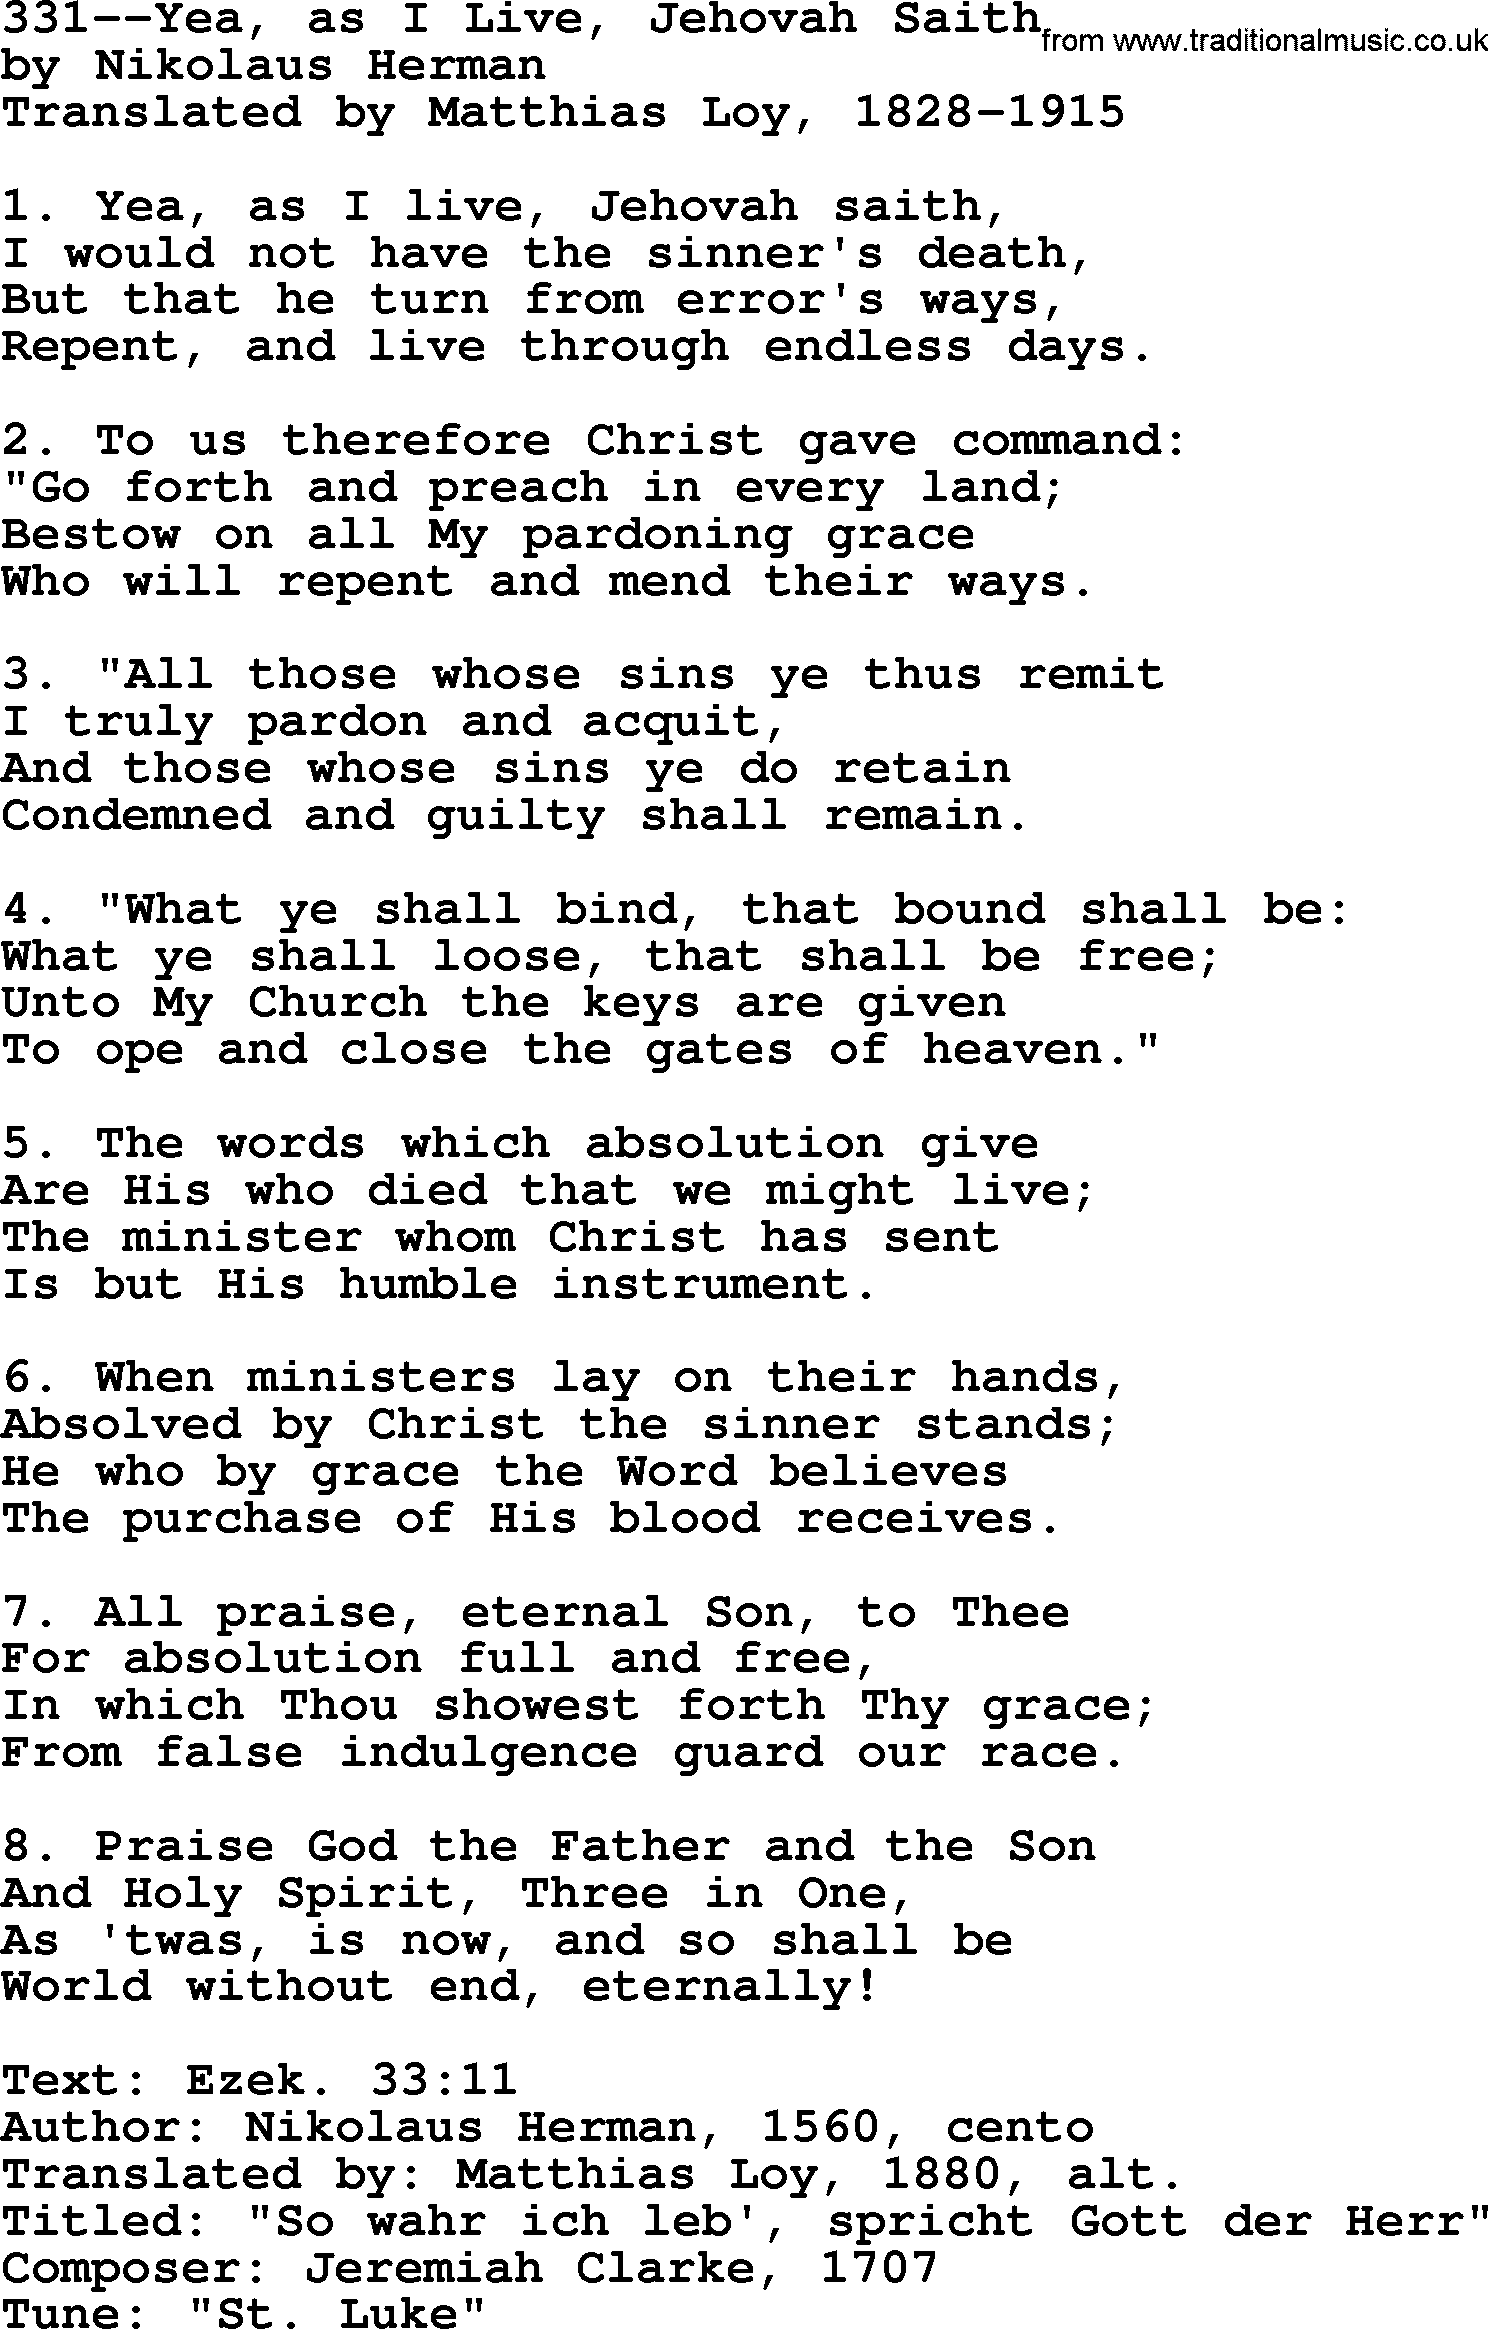 Lutheran Hymn: 331--Yea, as I Live, Jehovah Saith.txt lyrics with PDF